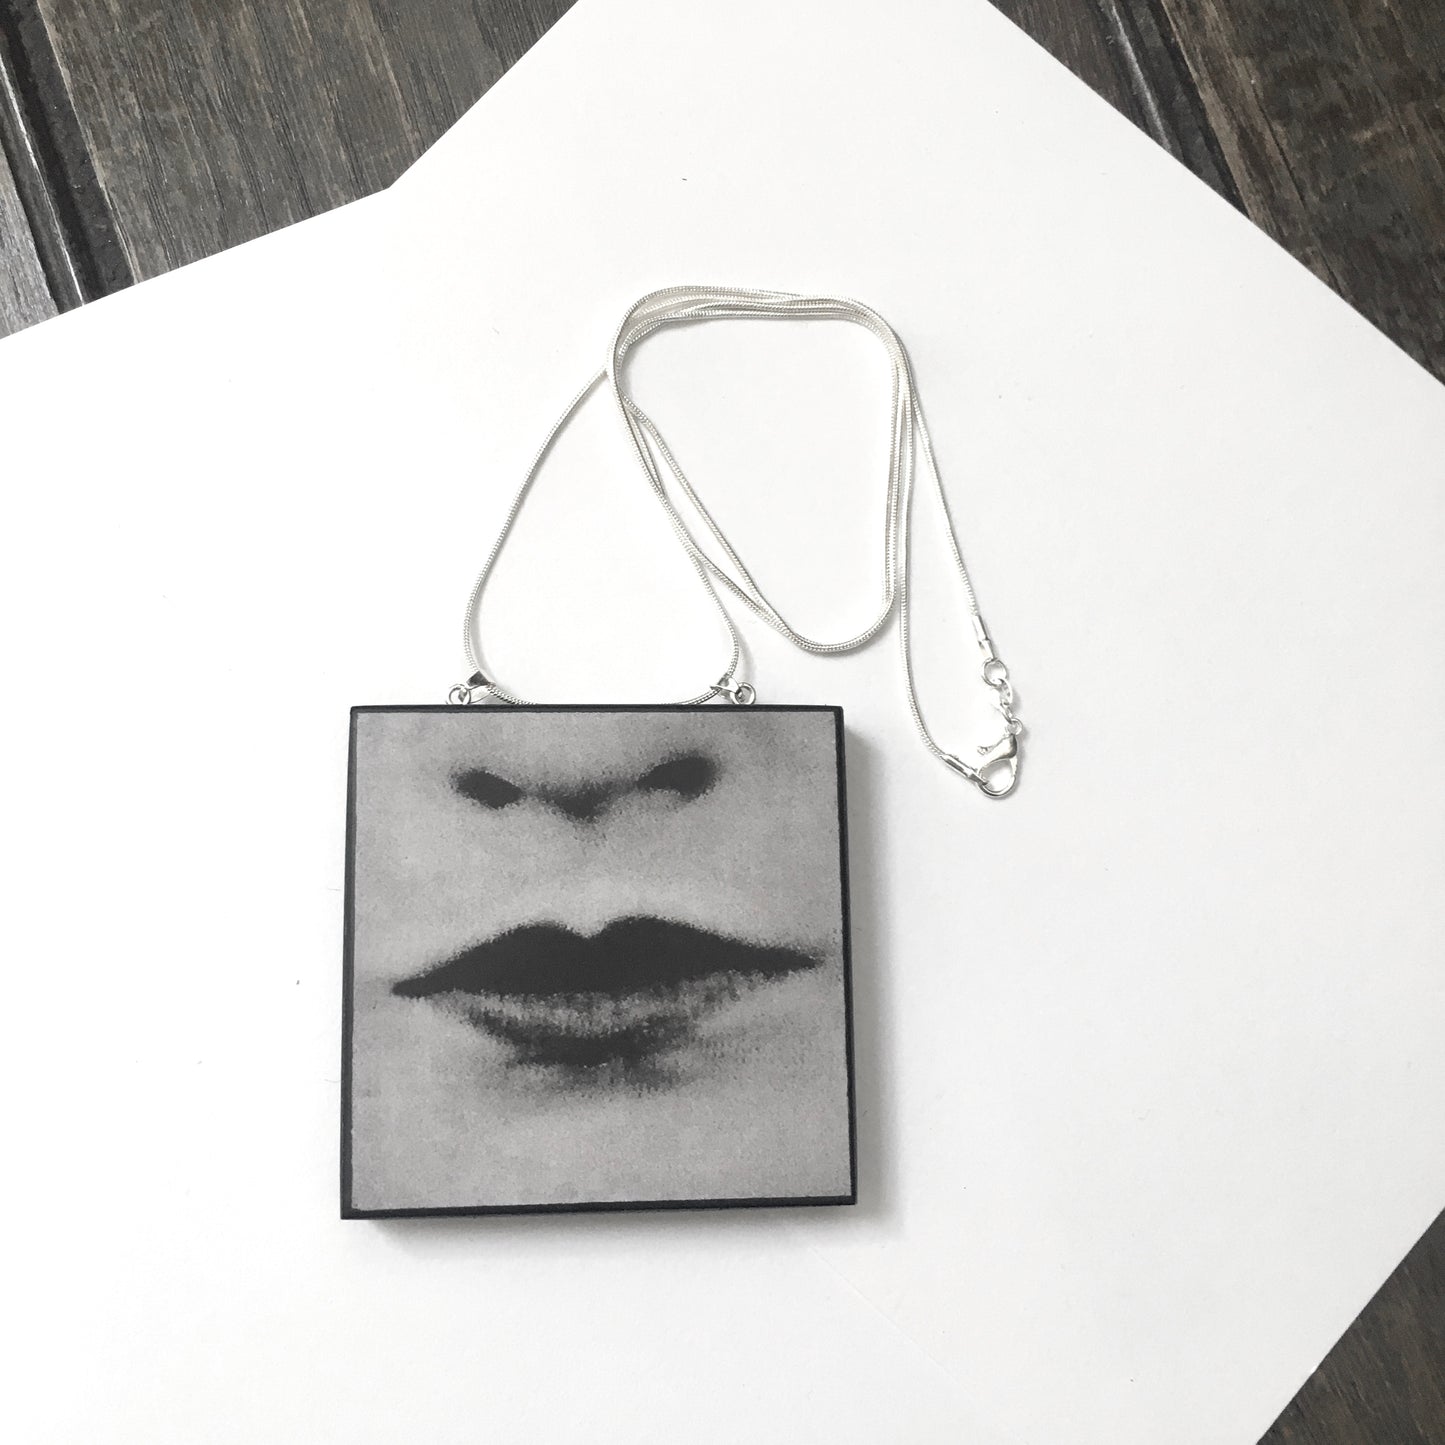 Lips Pop art necklace